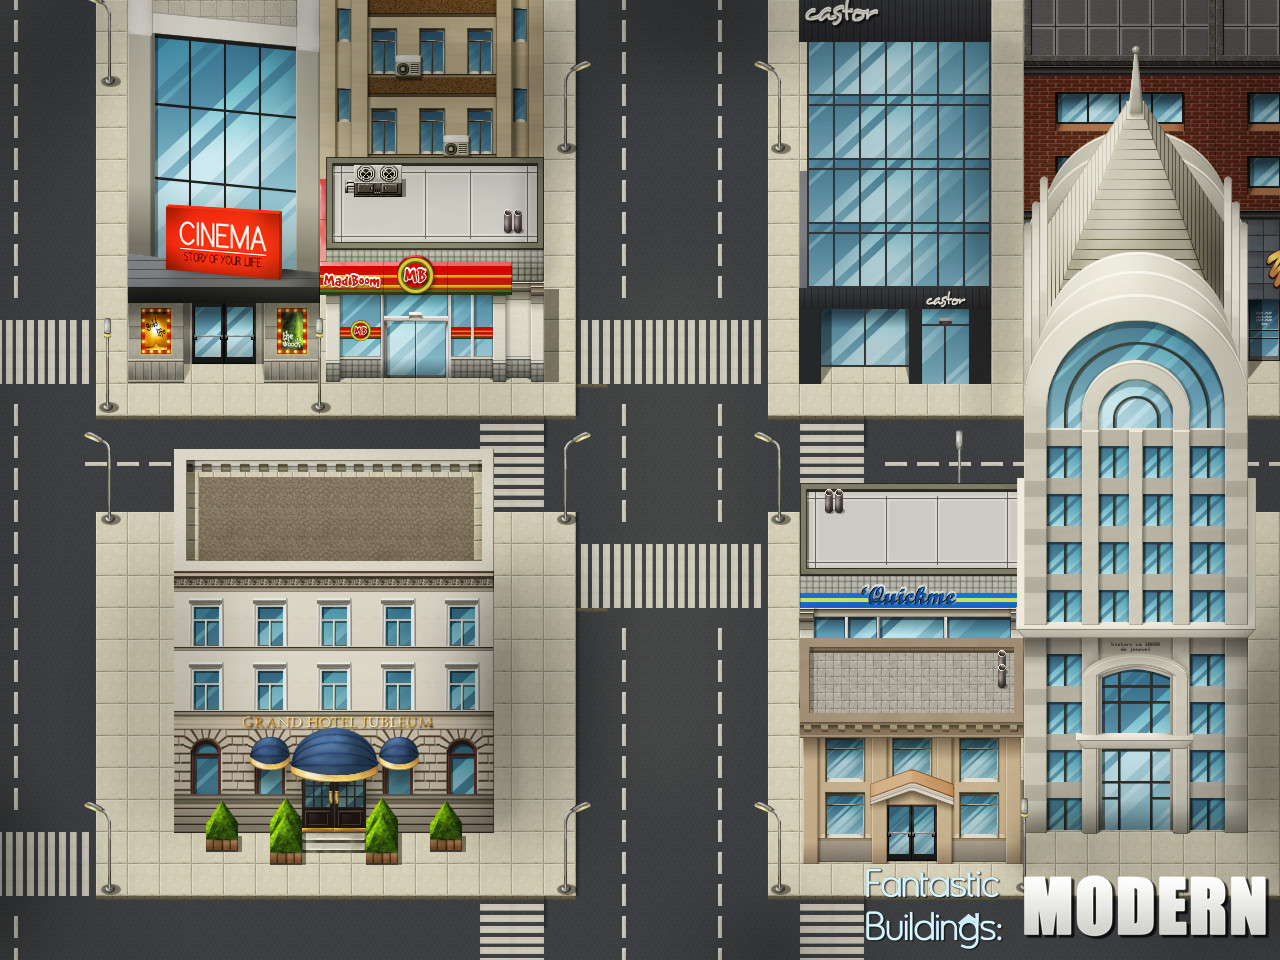 RPG Maker VX - Ace Fantastic Buildings: Modern DLC EU Steam CD Key, 5.07$